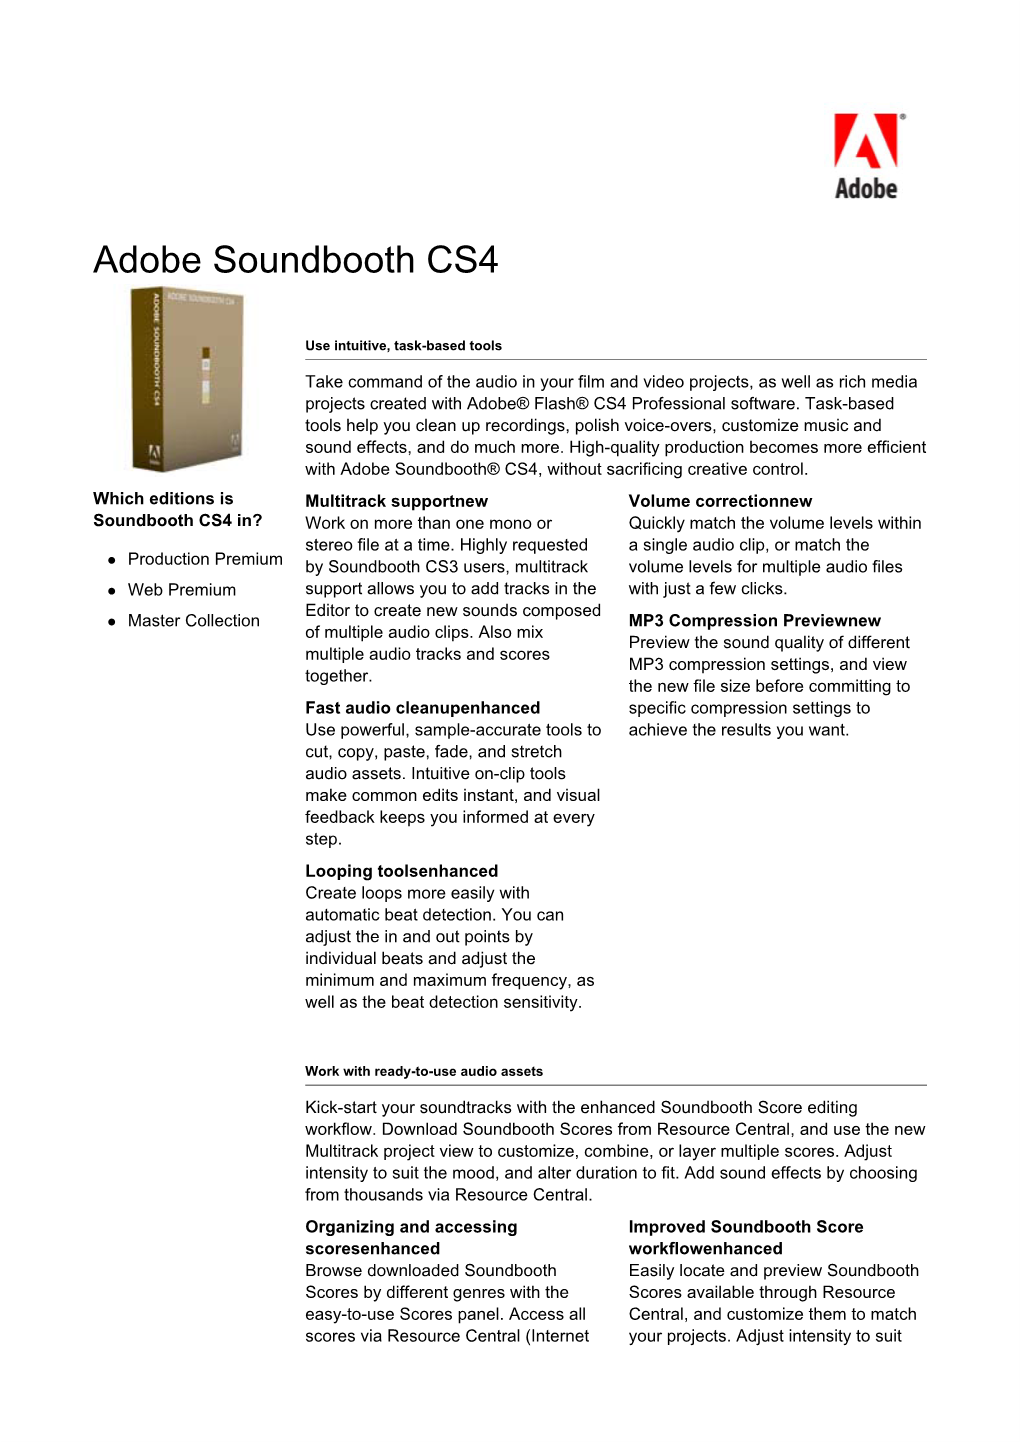 Adobe Soundbooth CS4